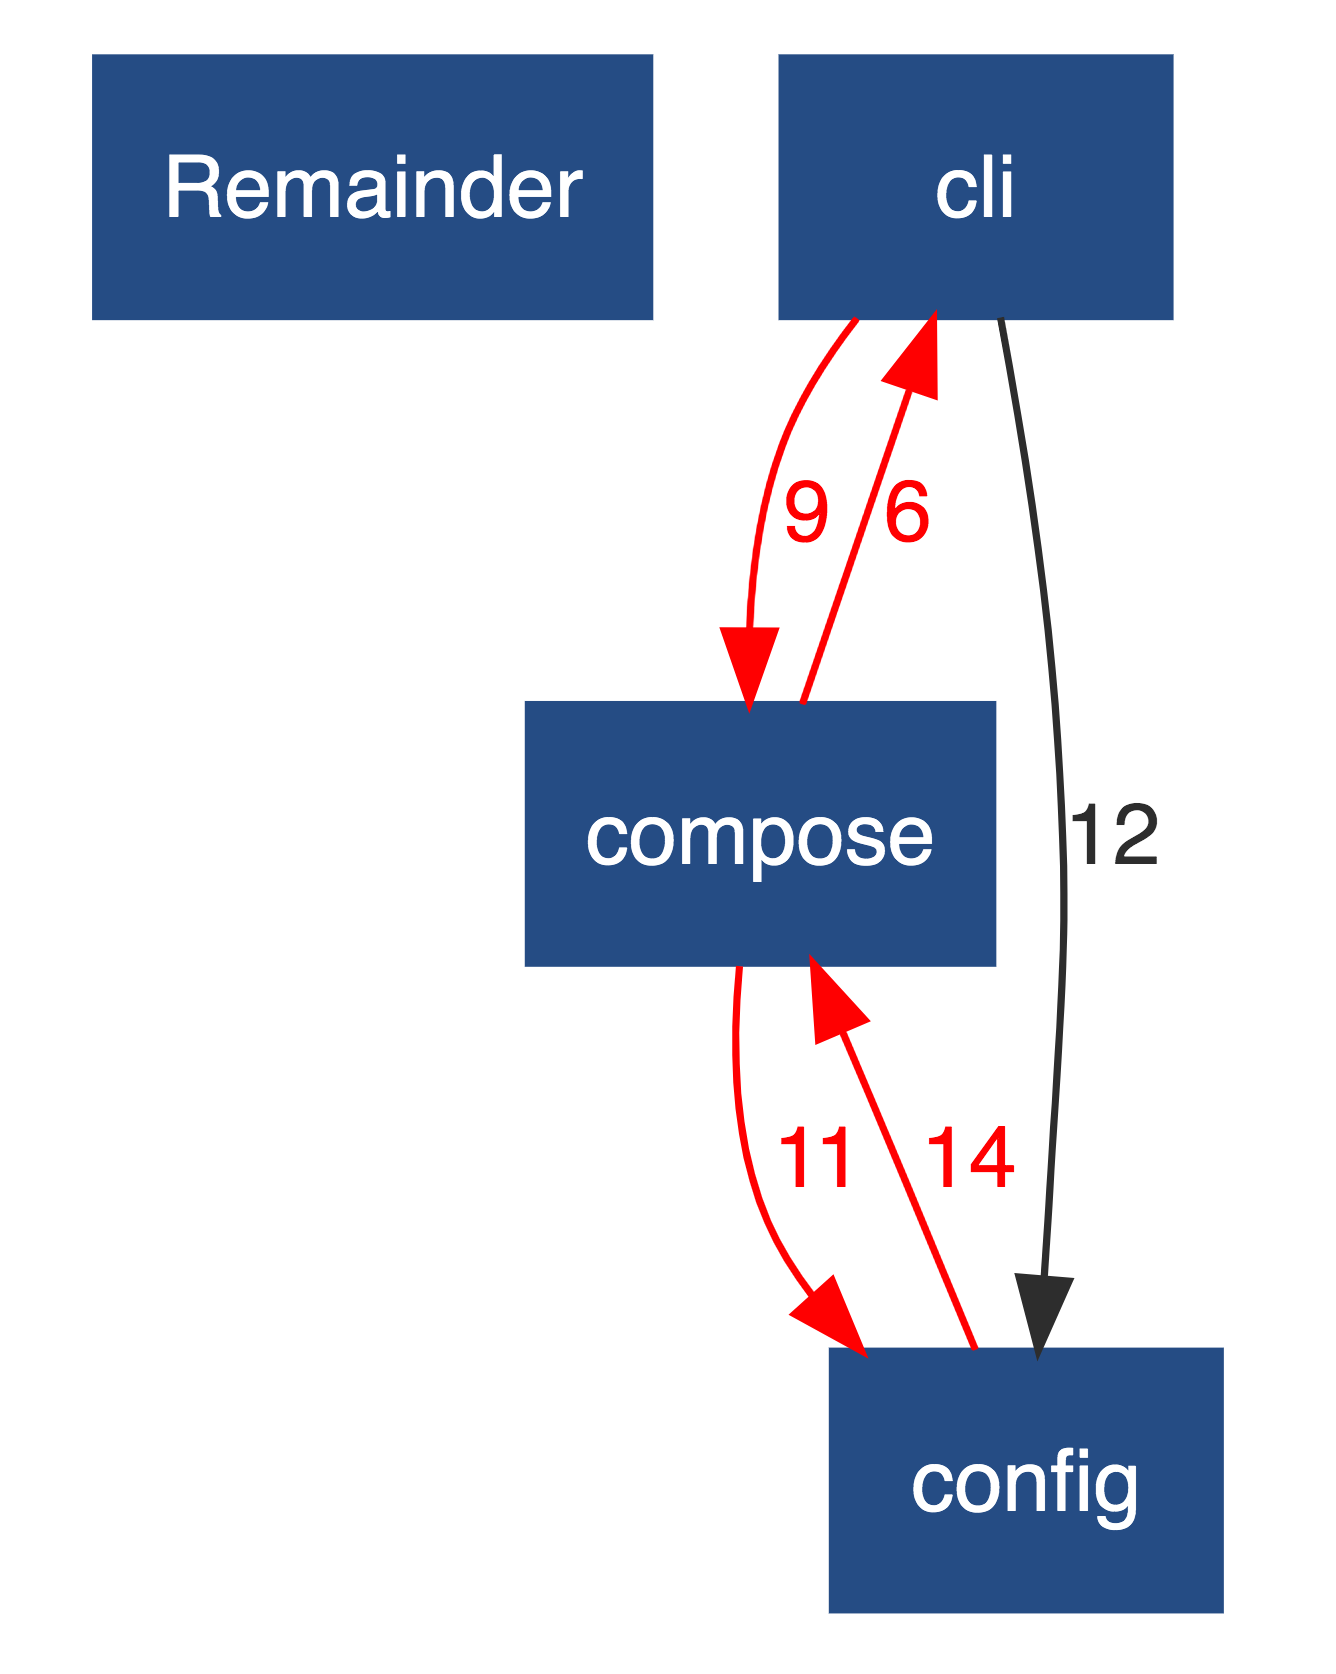 Compose component entanglement